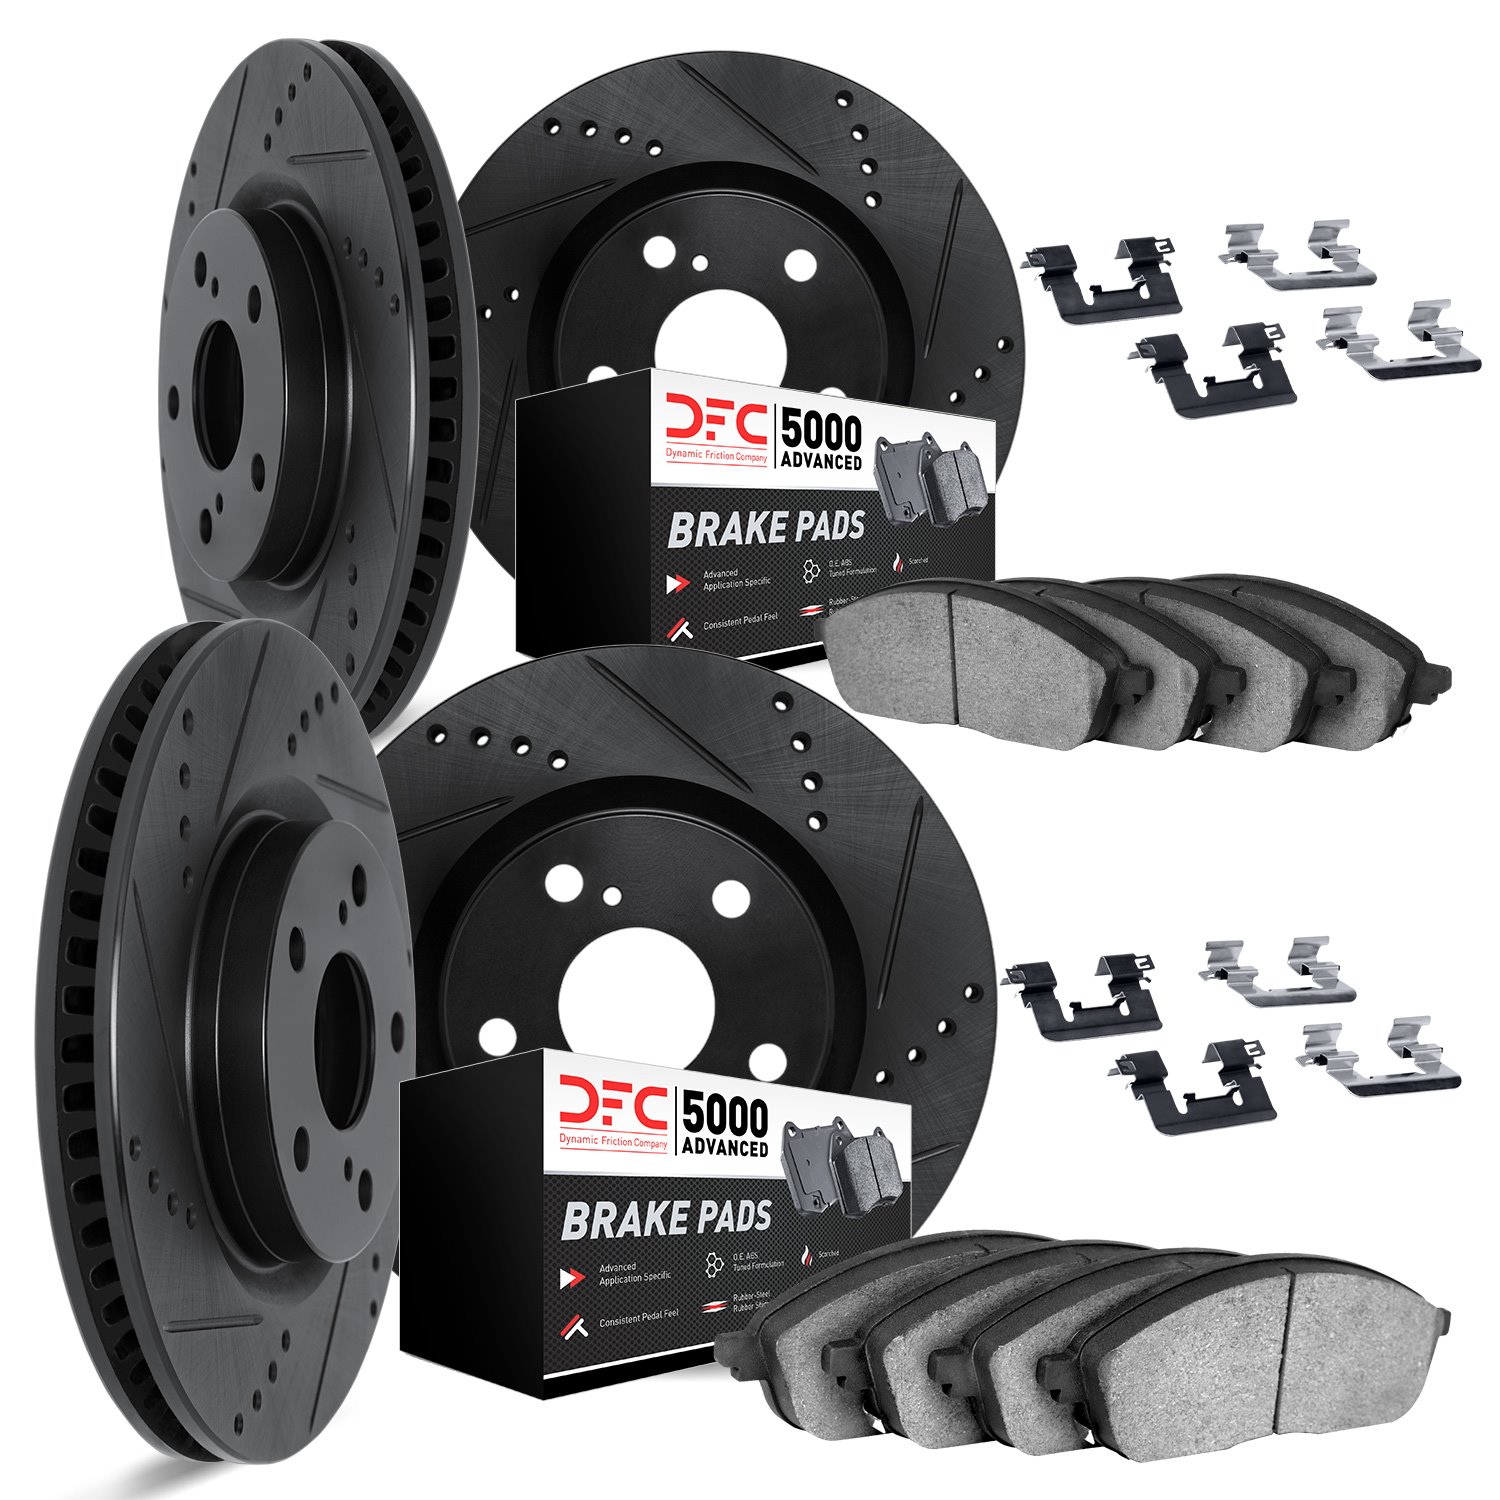 8514-67056 Drilled/Slotted Brake Rotors w/5000 Advanced Brake Pads Kit & Hardware [Black], 2003-2011 Infiniti/Nissan, Position: